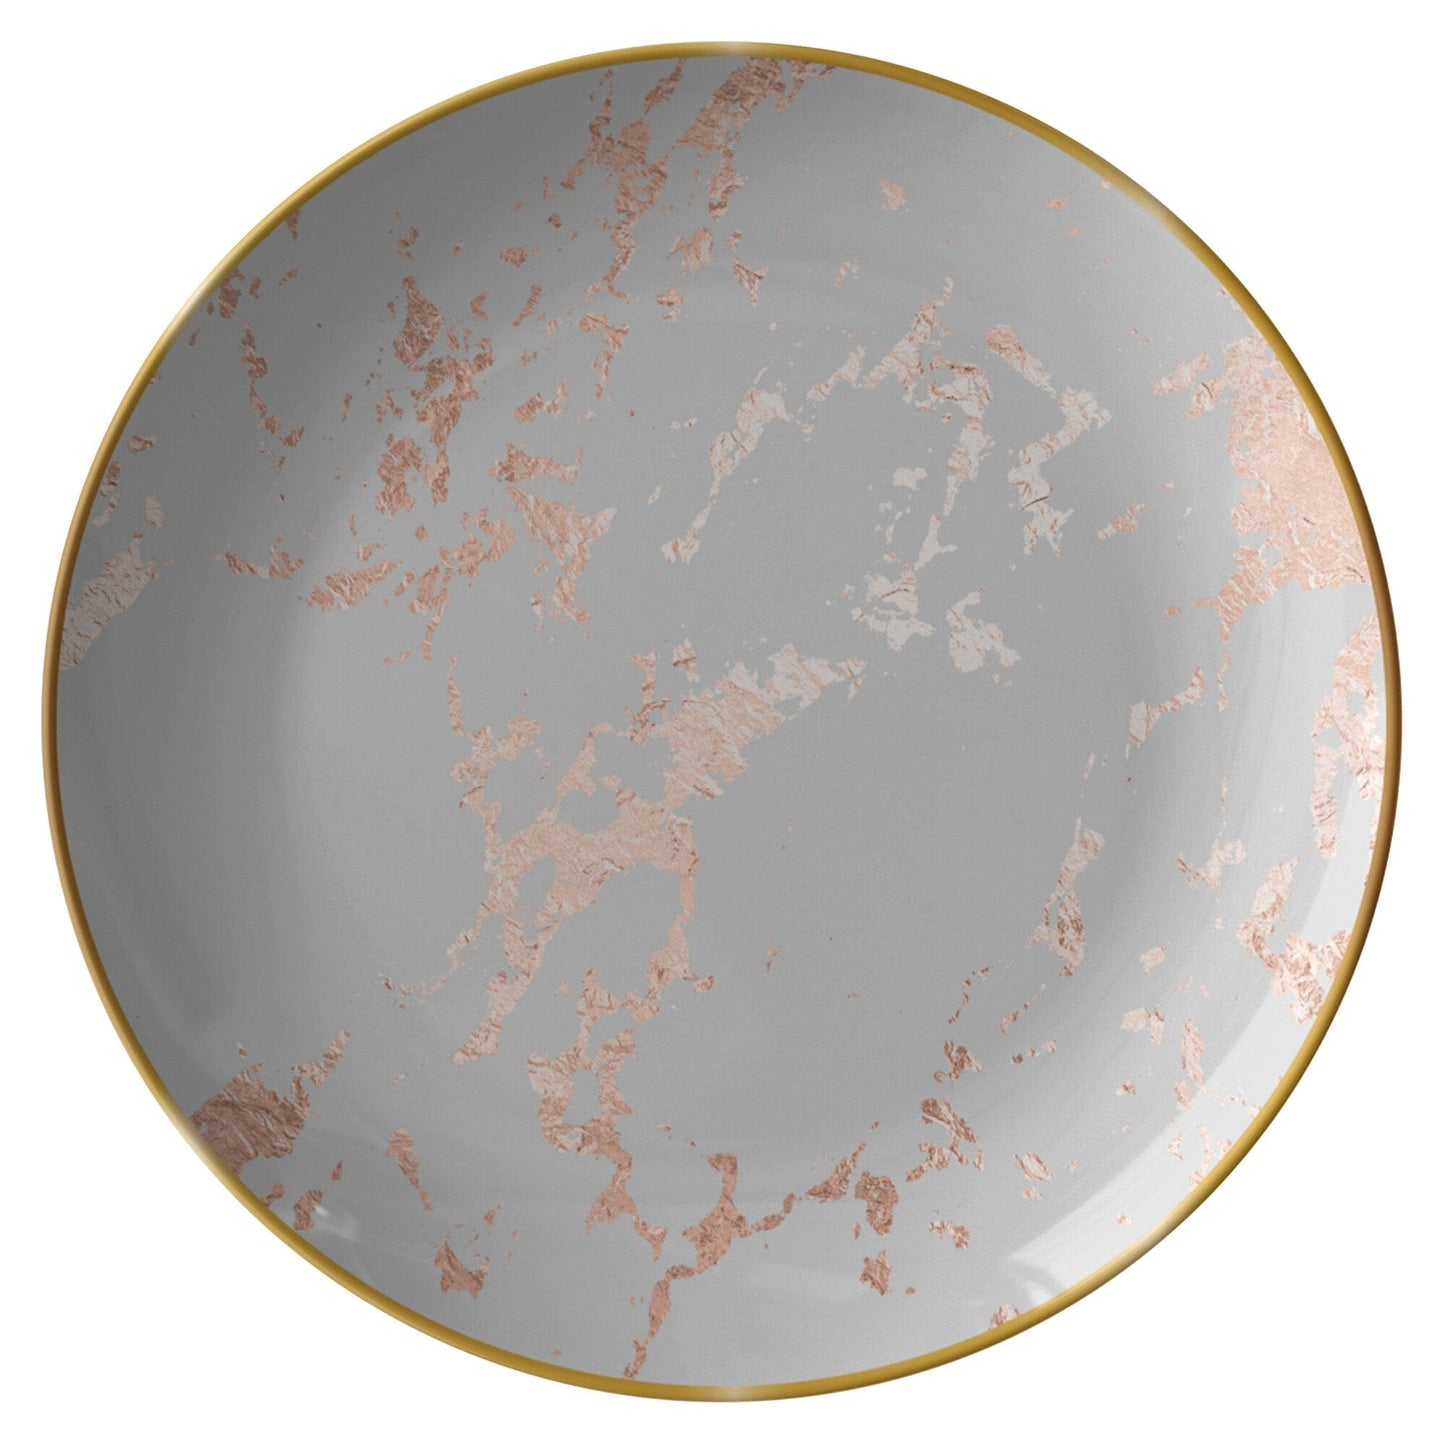 Kate McEnroe New York Marble Dinner Plate in Light Grey Blush with Gold Rim Plates